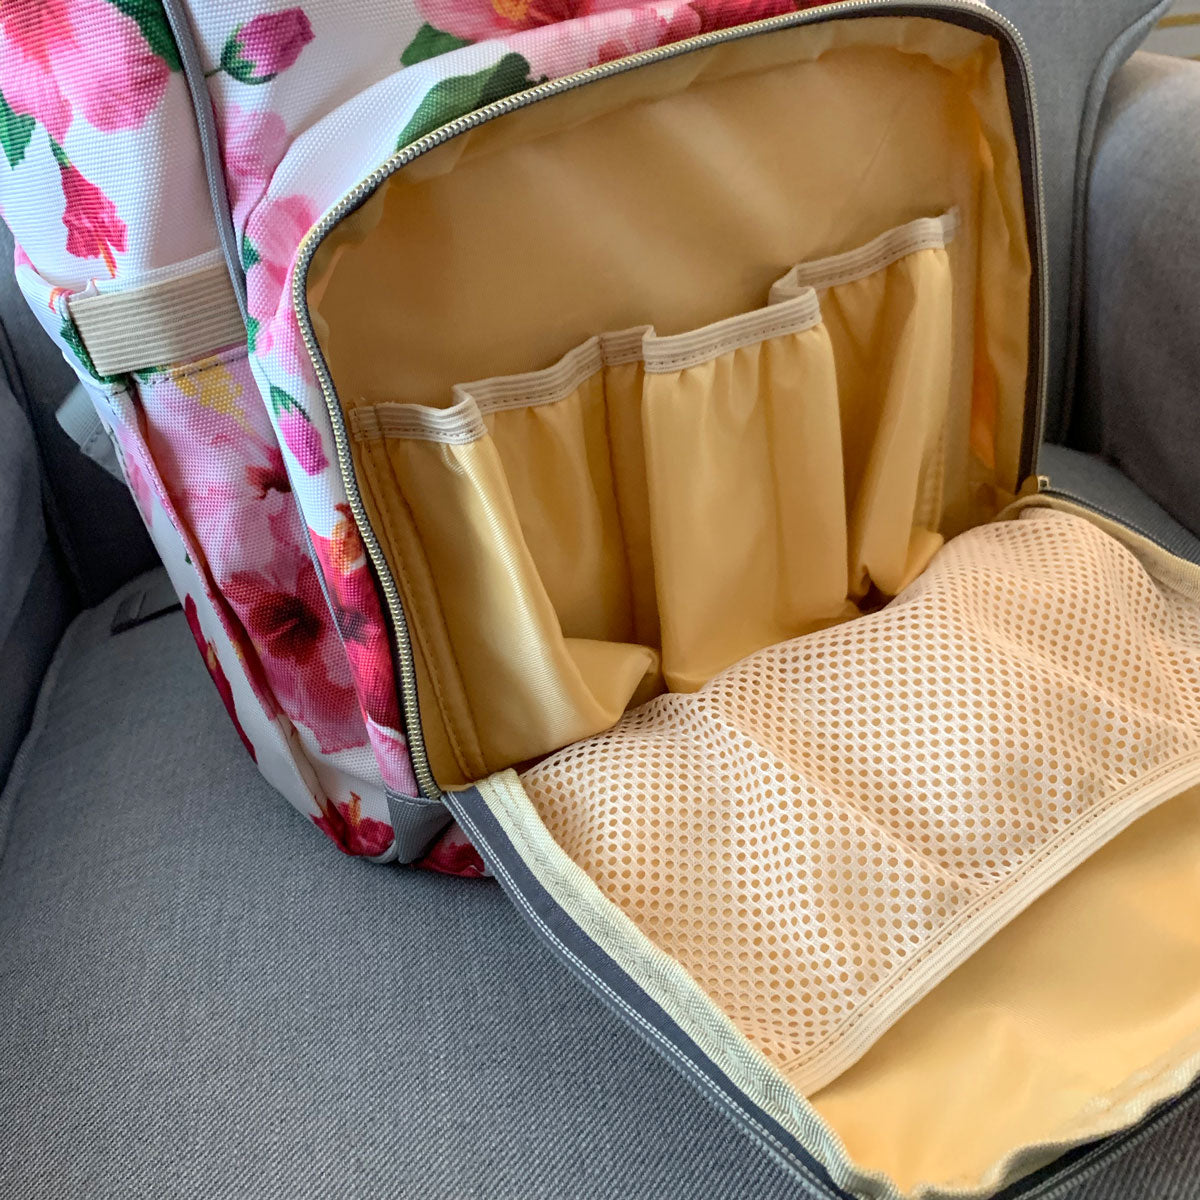 Guam Slate Floral Baby Diaper Backpack Bag